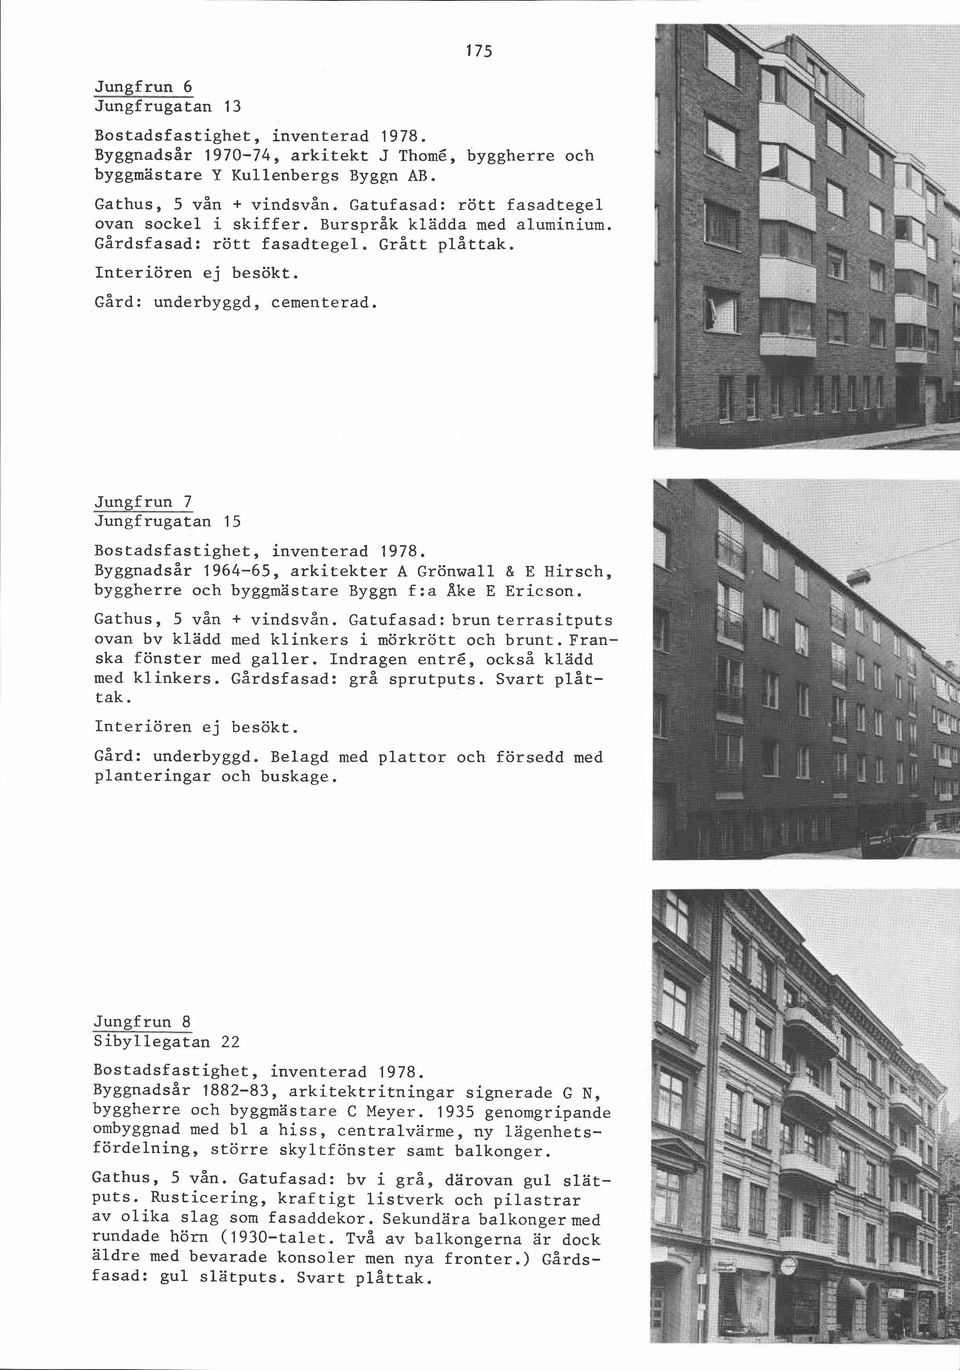 Jungfrun 7 Jungfrugatan 15 ~yggnadsår 1964-65, arkitekter A Grönwall & E Hirsch, byggherre och byggmästare Byggn f:a Ake E Ericson. Gathus, 5 vån + vindsvån.